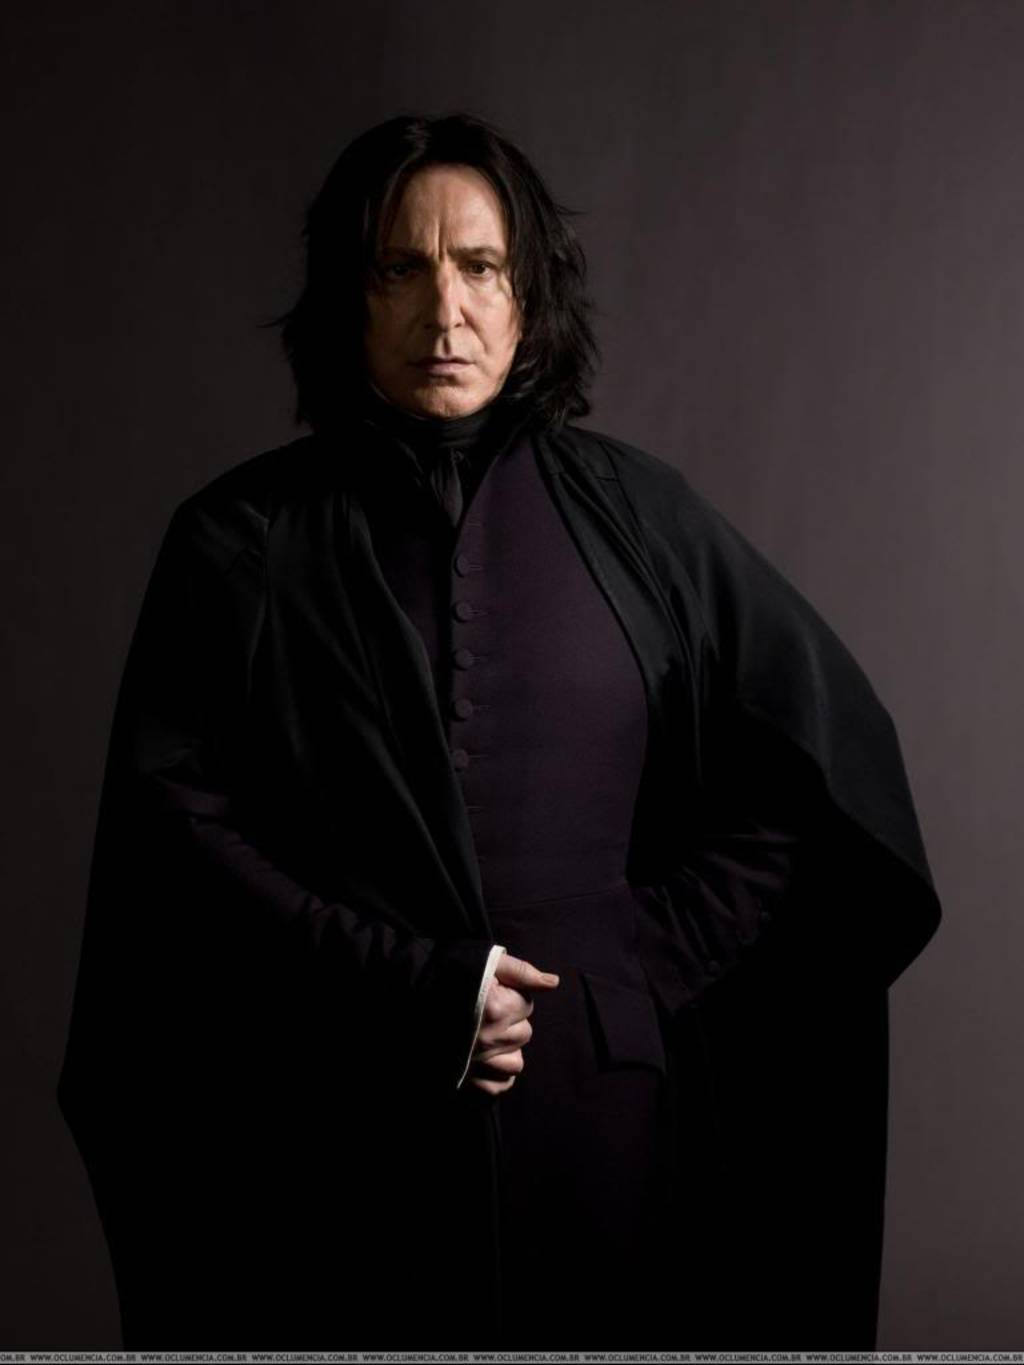 El profesor 'Severus Snape' en la saga de Harry Potter (2001-2001). 